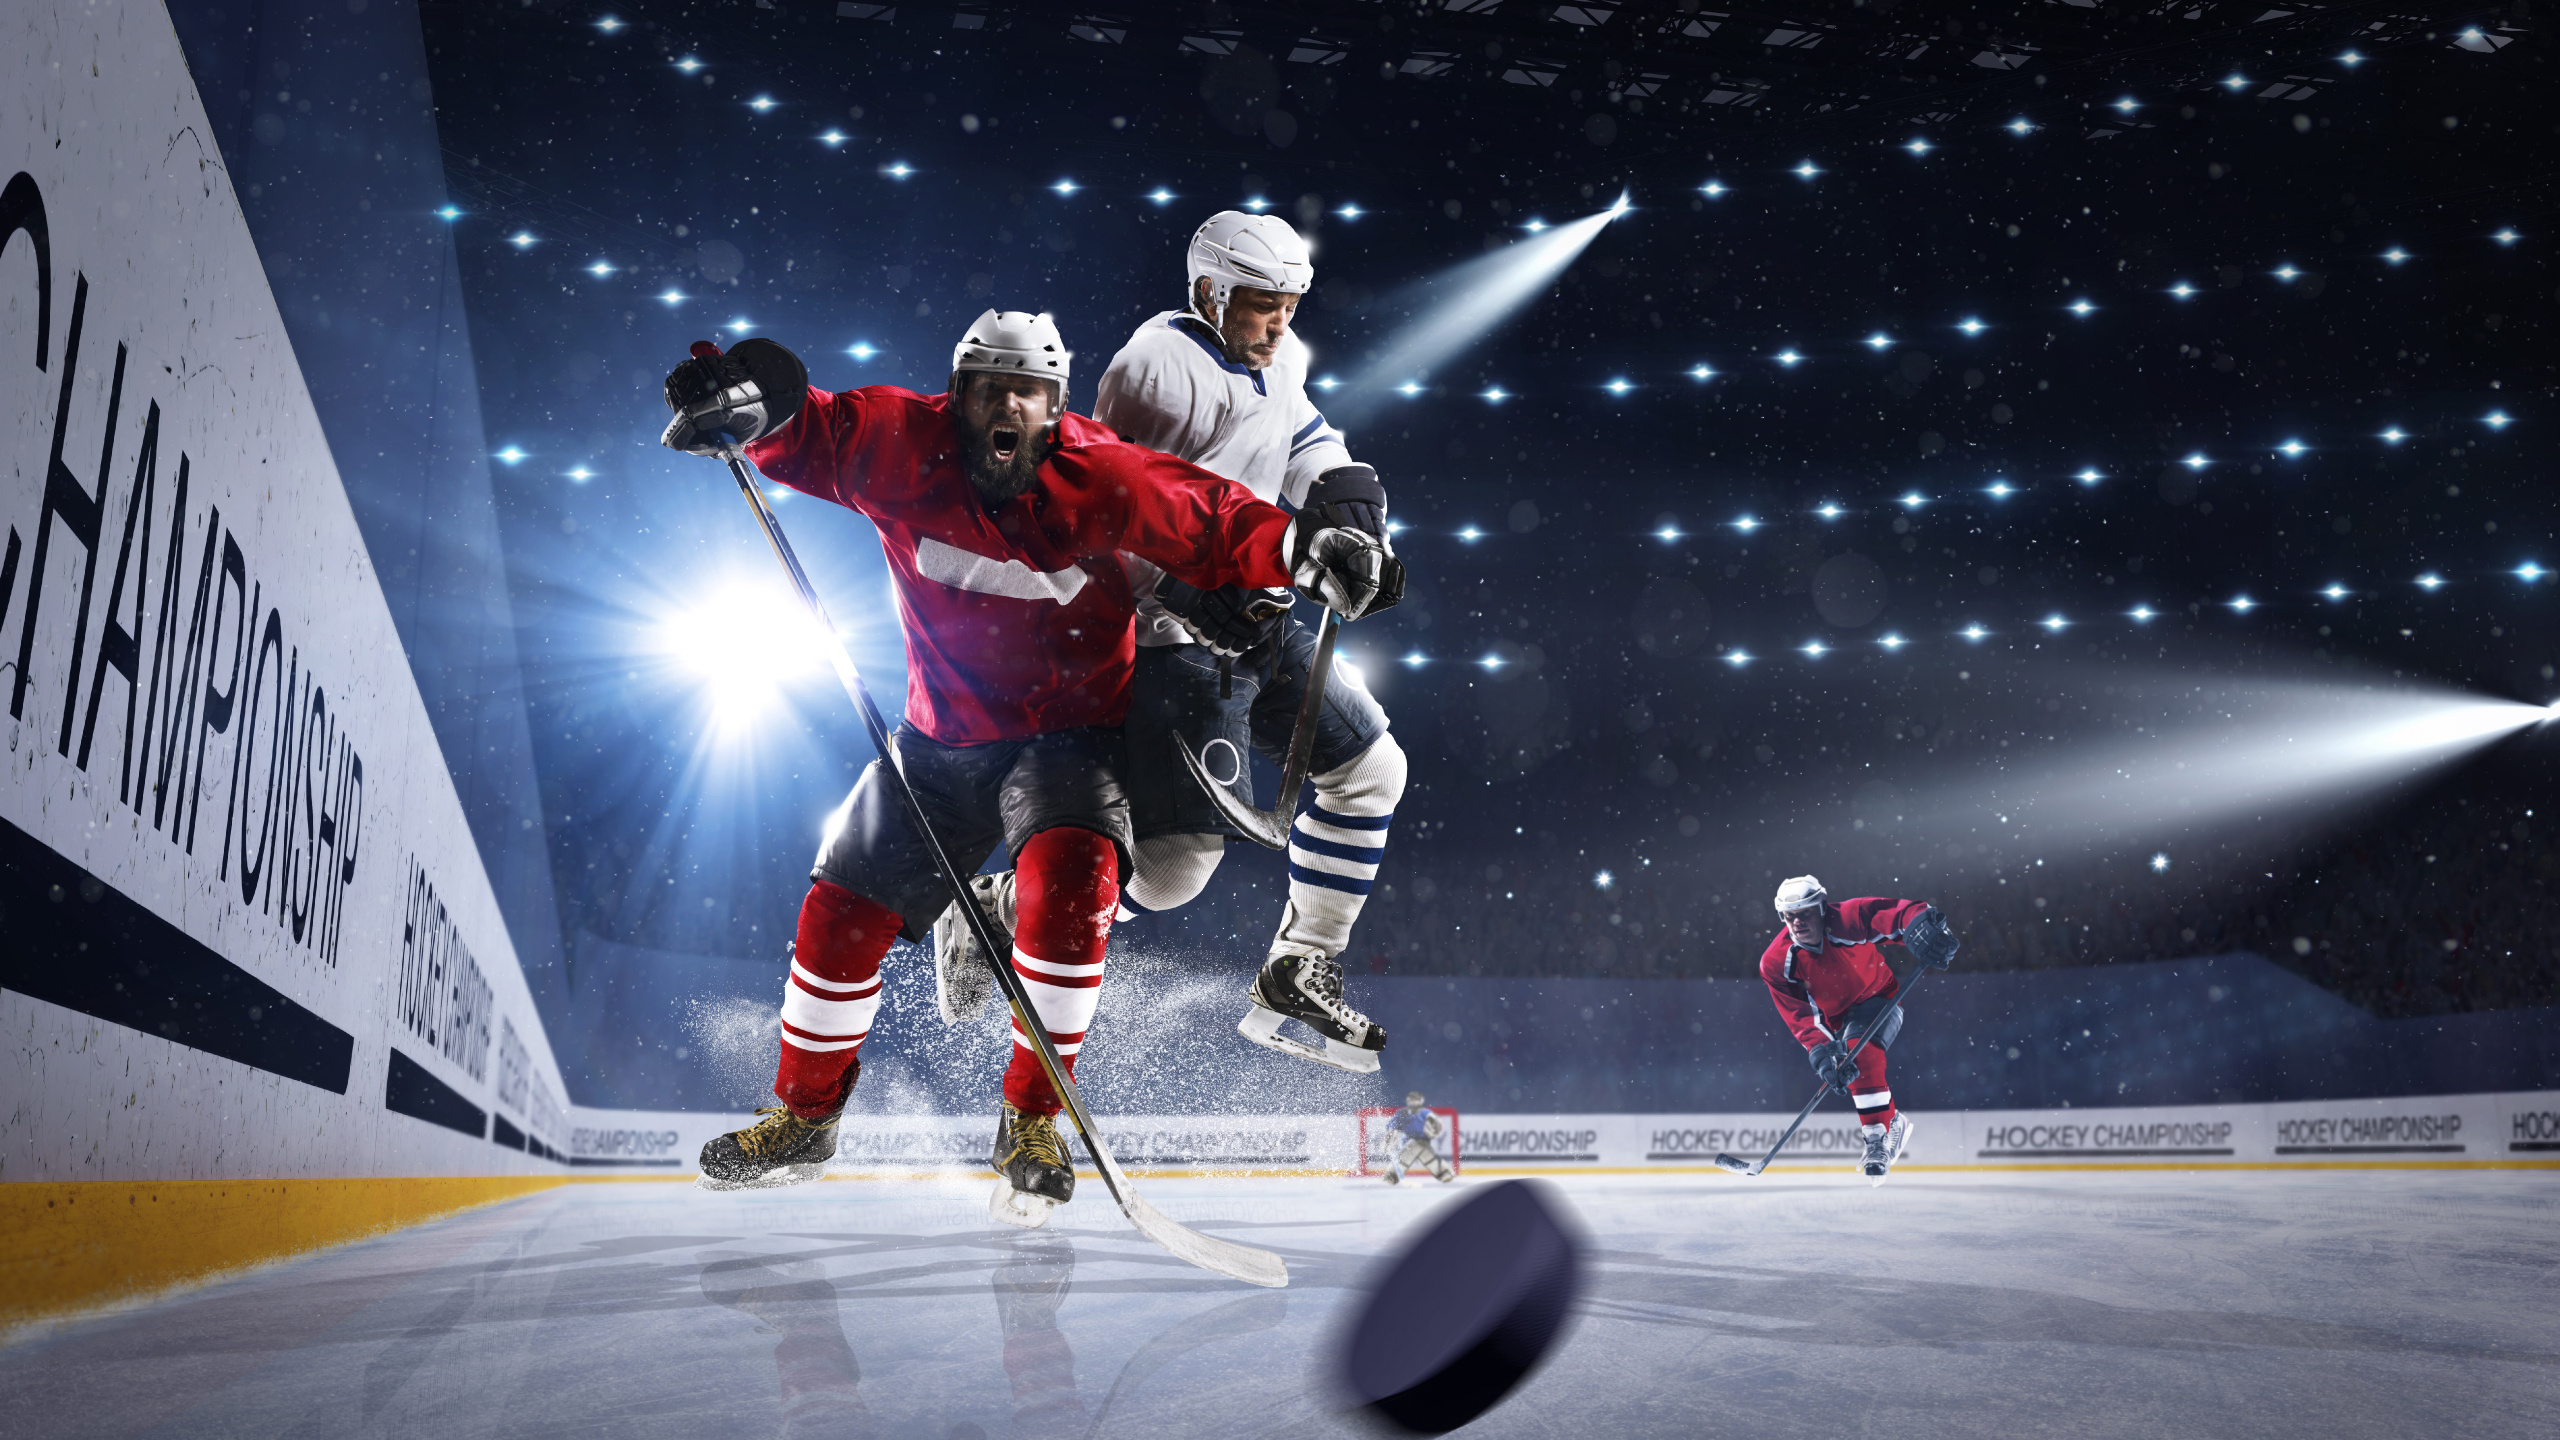 Ice Hockey Players on Ice Hockey Field. Wallpaper in 2560x1440 Resolution